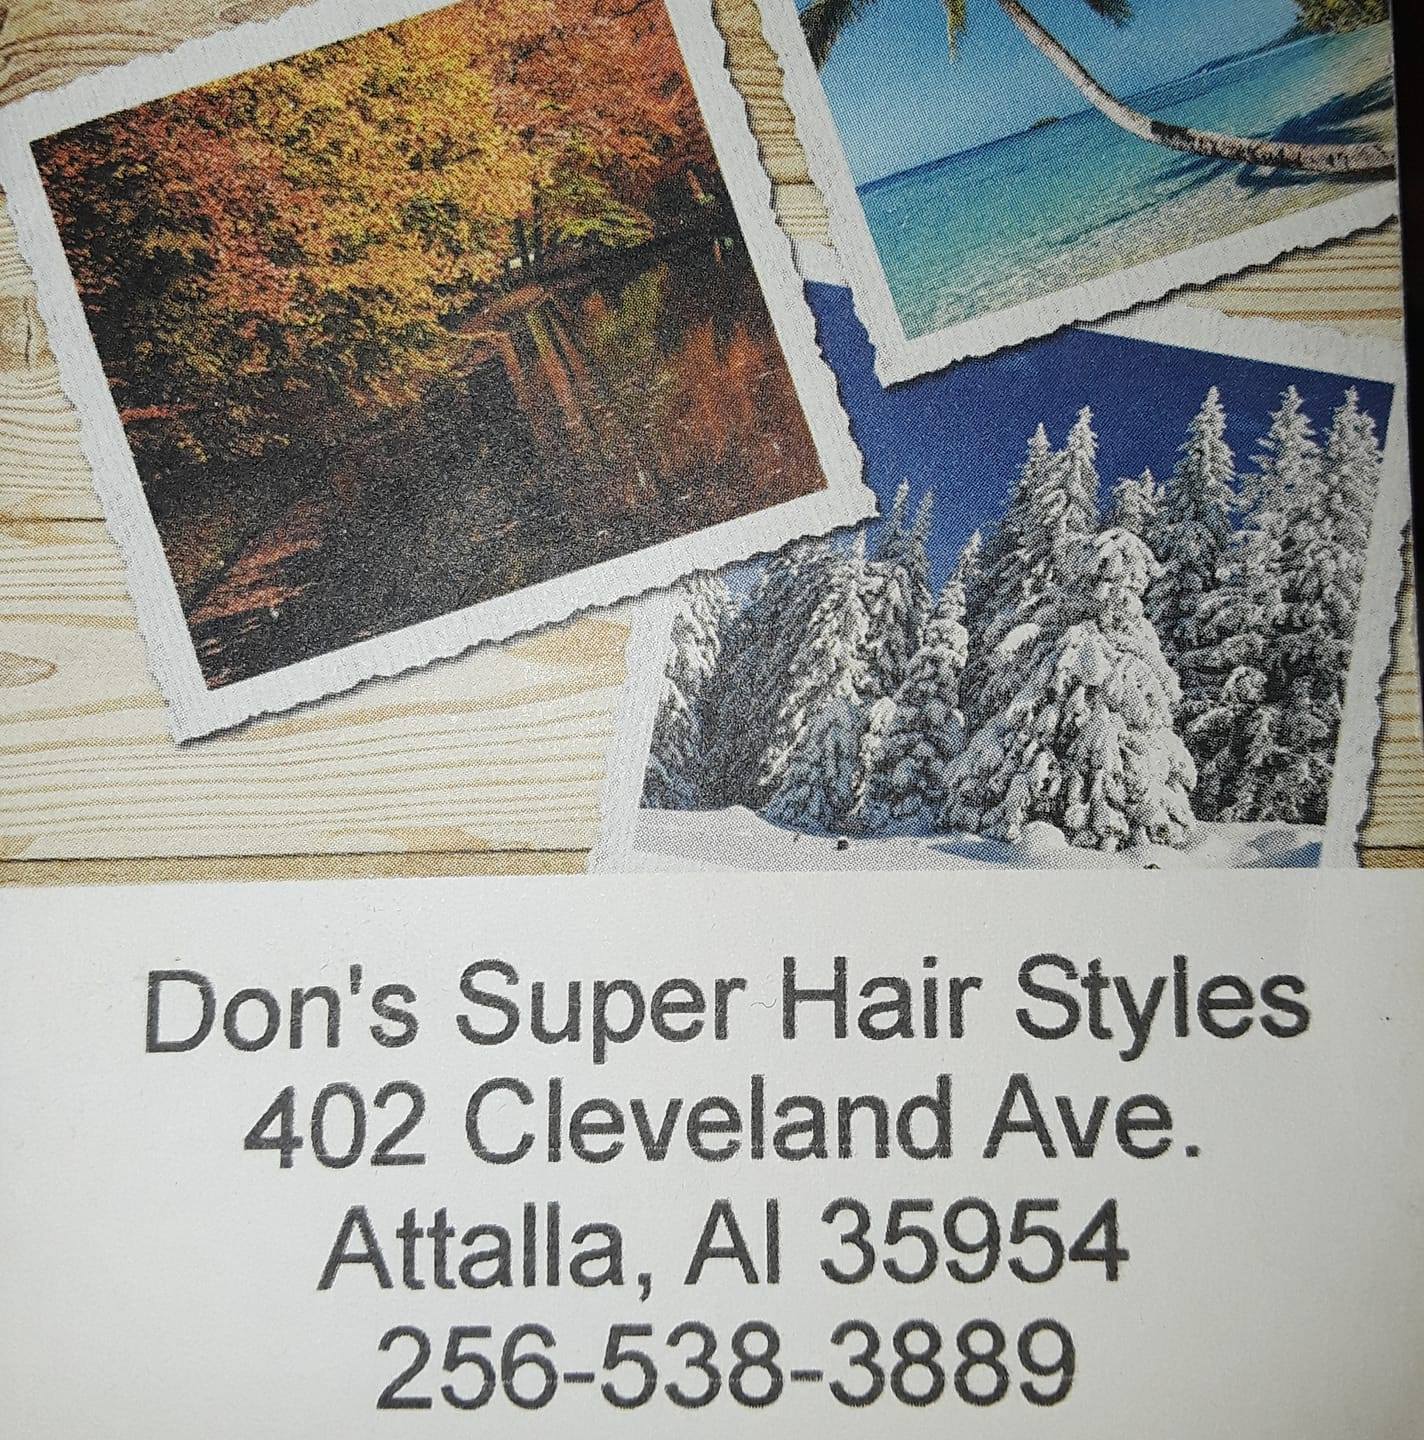 Don's Super Hairstyles 402 Cleveland Ave, Attalla Alabama 35954